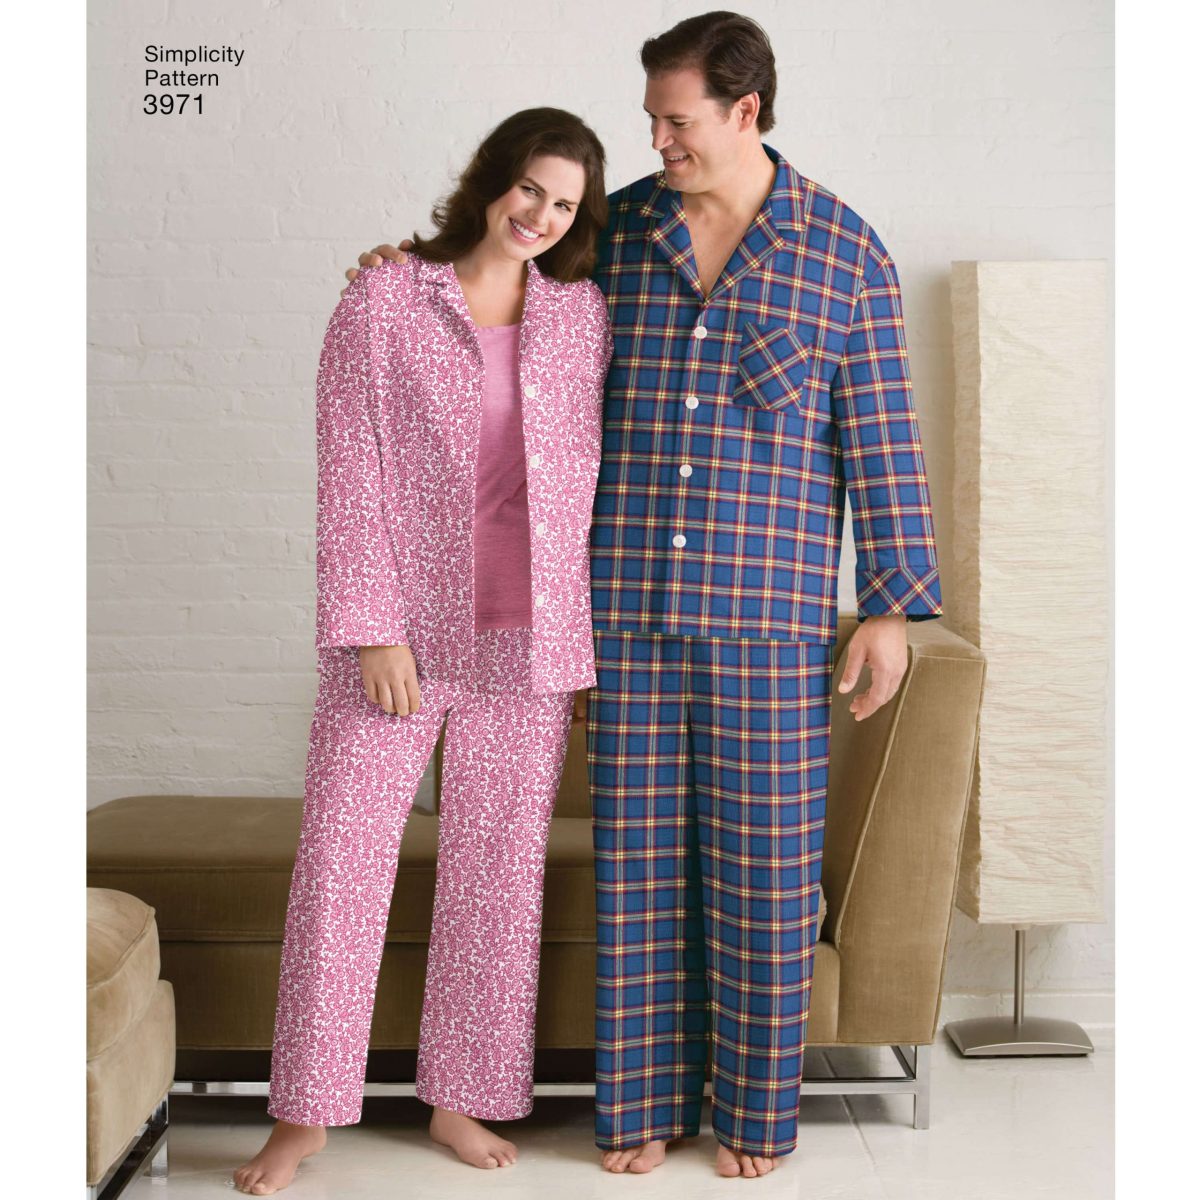 Women's & Men's Plus Size Sleepwear and Pyjamas